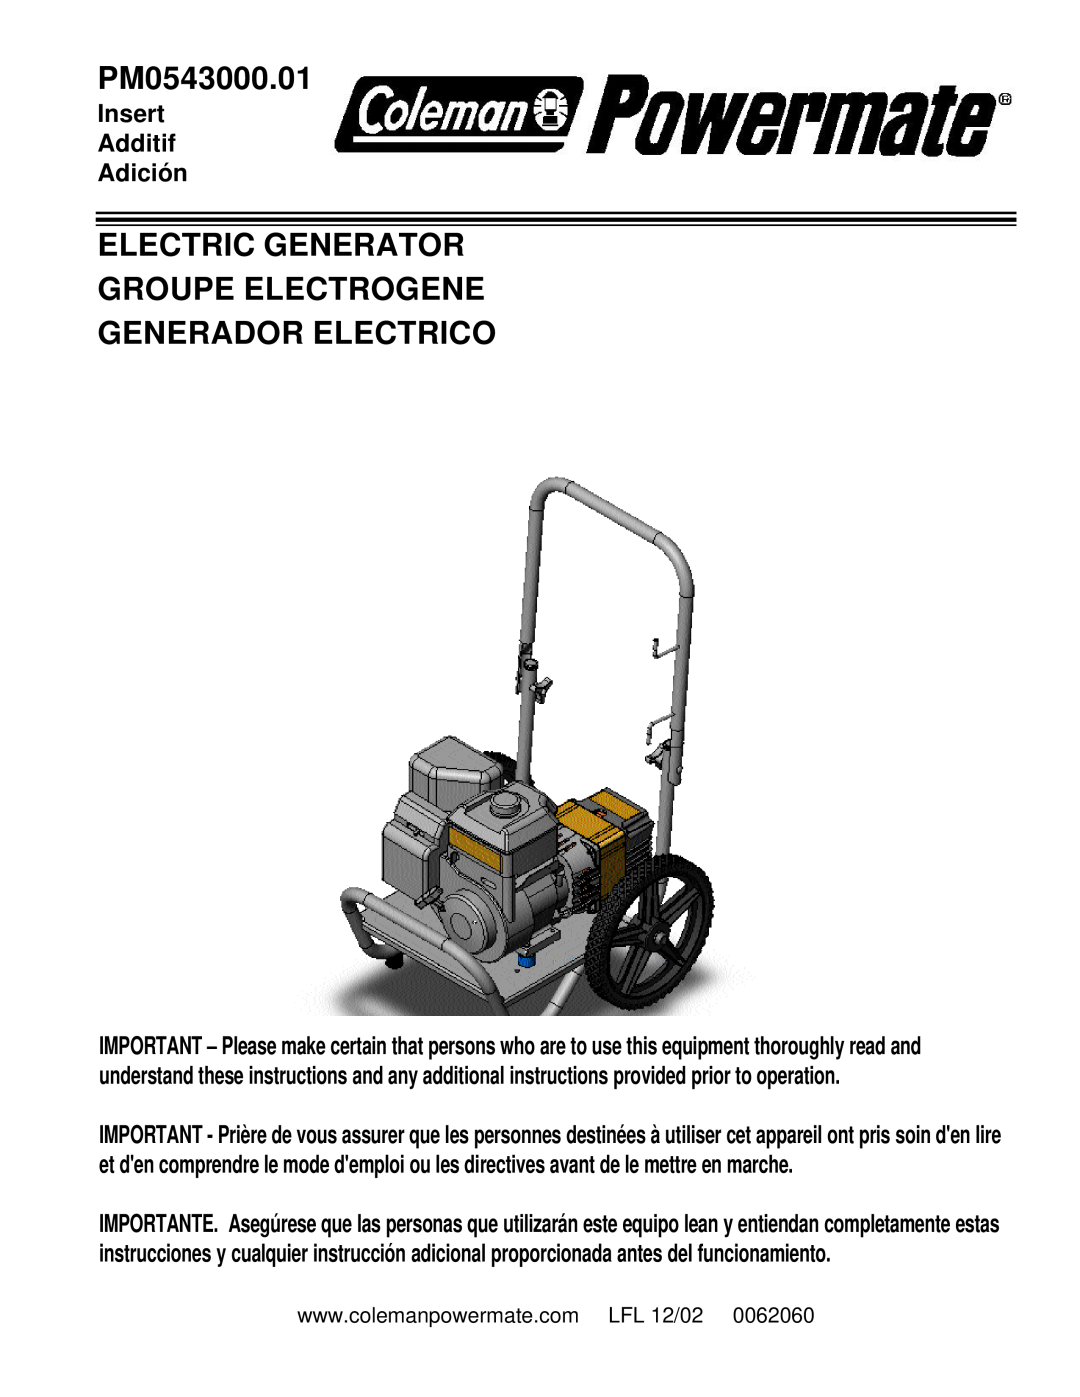 Powermate PM0543000.01 manual Electric Generator Groupe Electrogene, Generador Electrico, Insert Additif Adición 